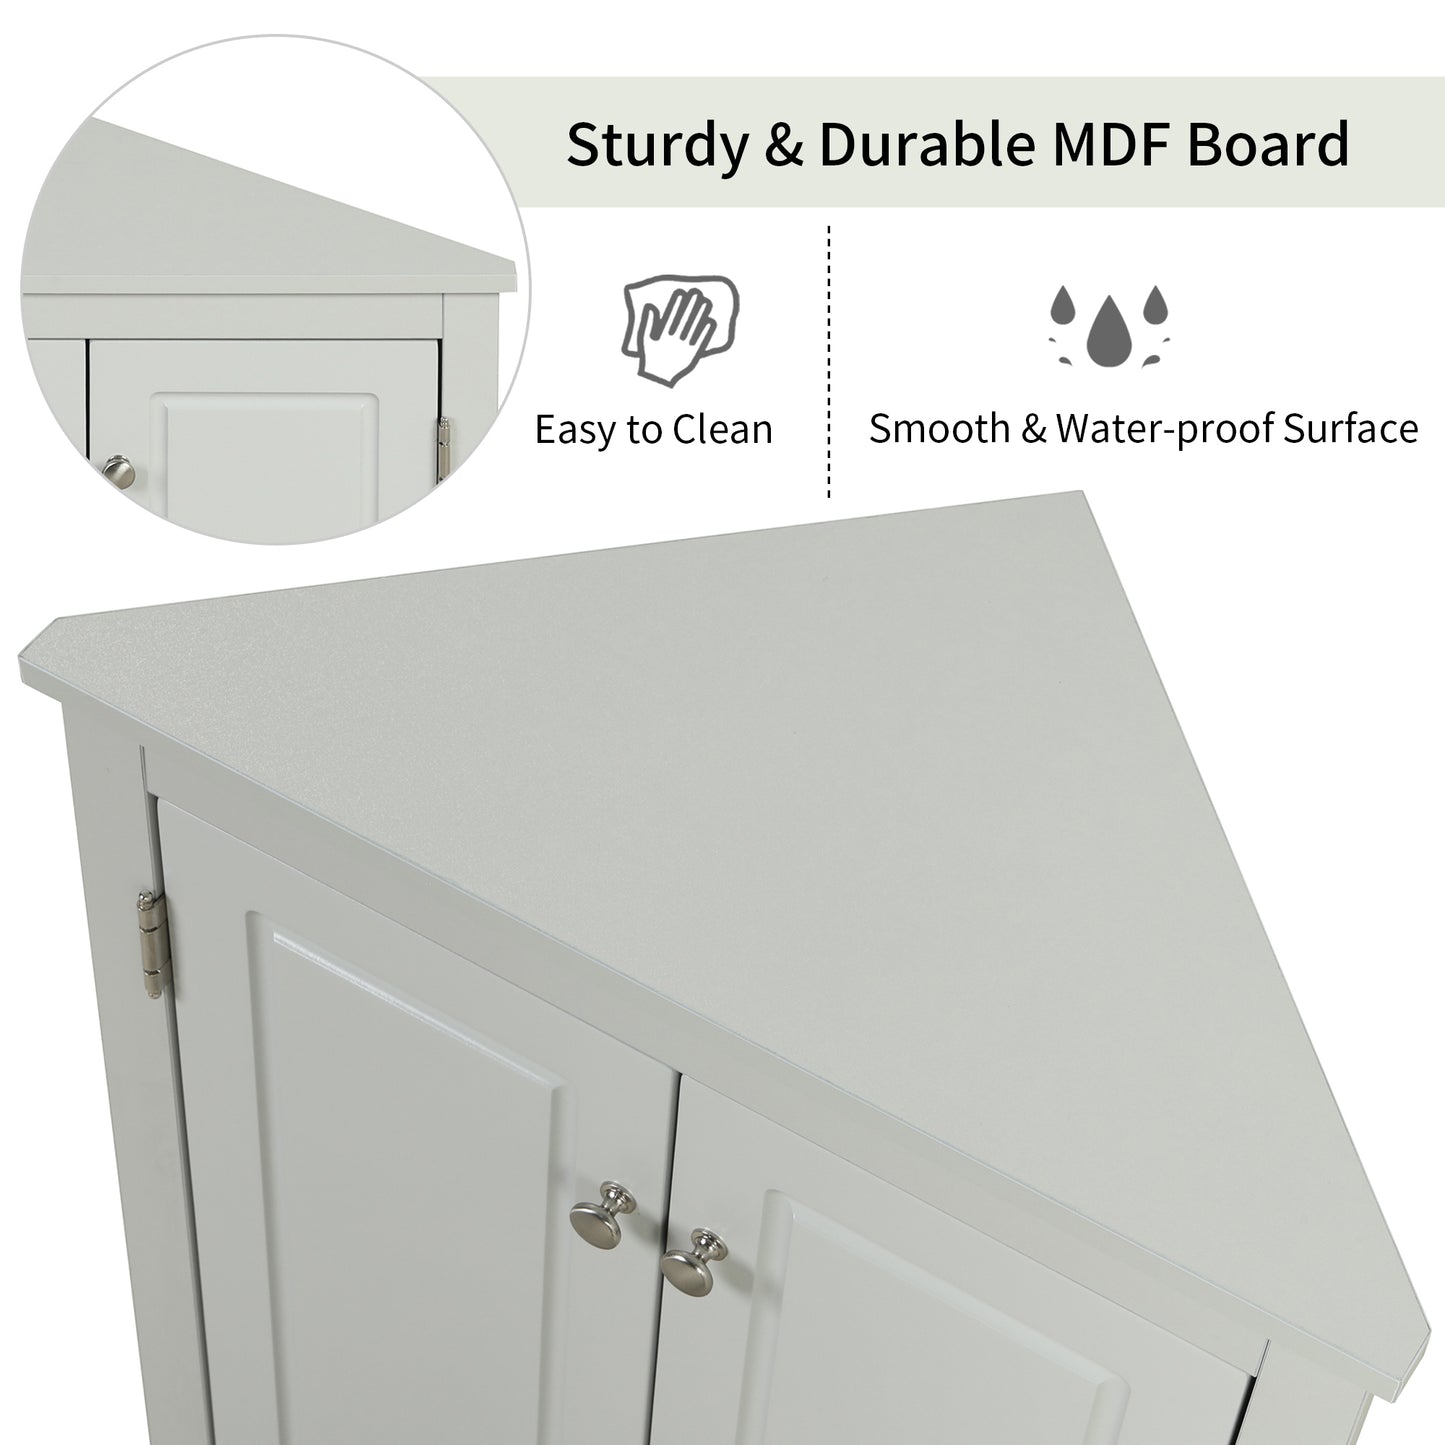 Grey Triangle Bathroom Storage Cabinet with Adjustable Shelves, Freestanding Floor Cabinet for Home Kitchen